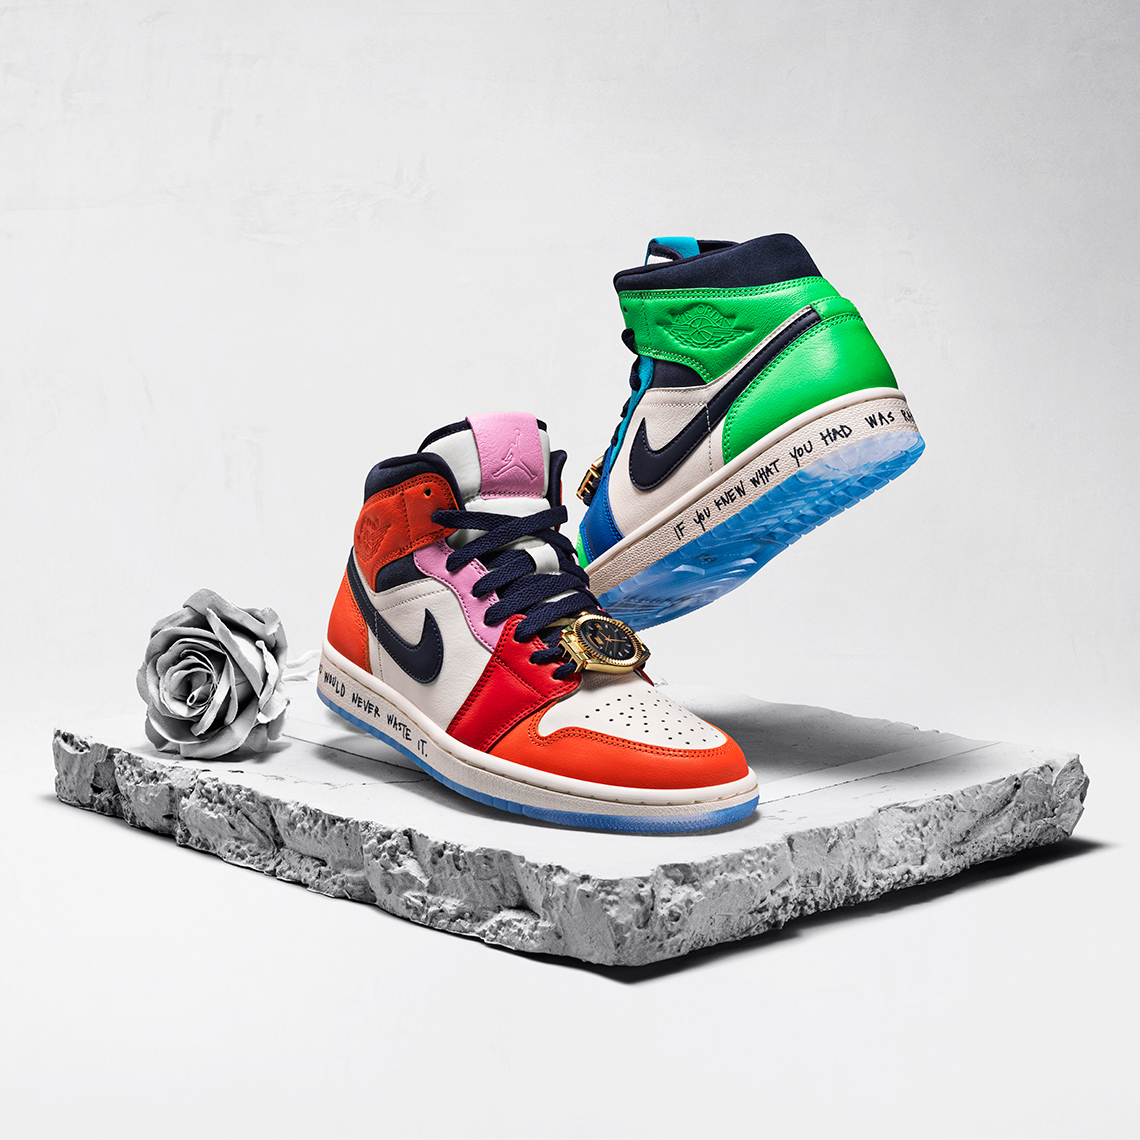 kranium søskende udtryk How Much Does The Air Jordan 1 Cost? | SneakerNews.com